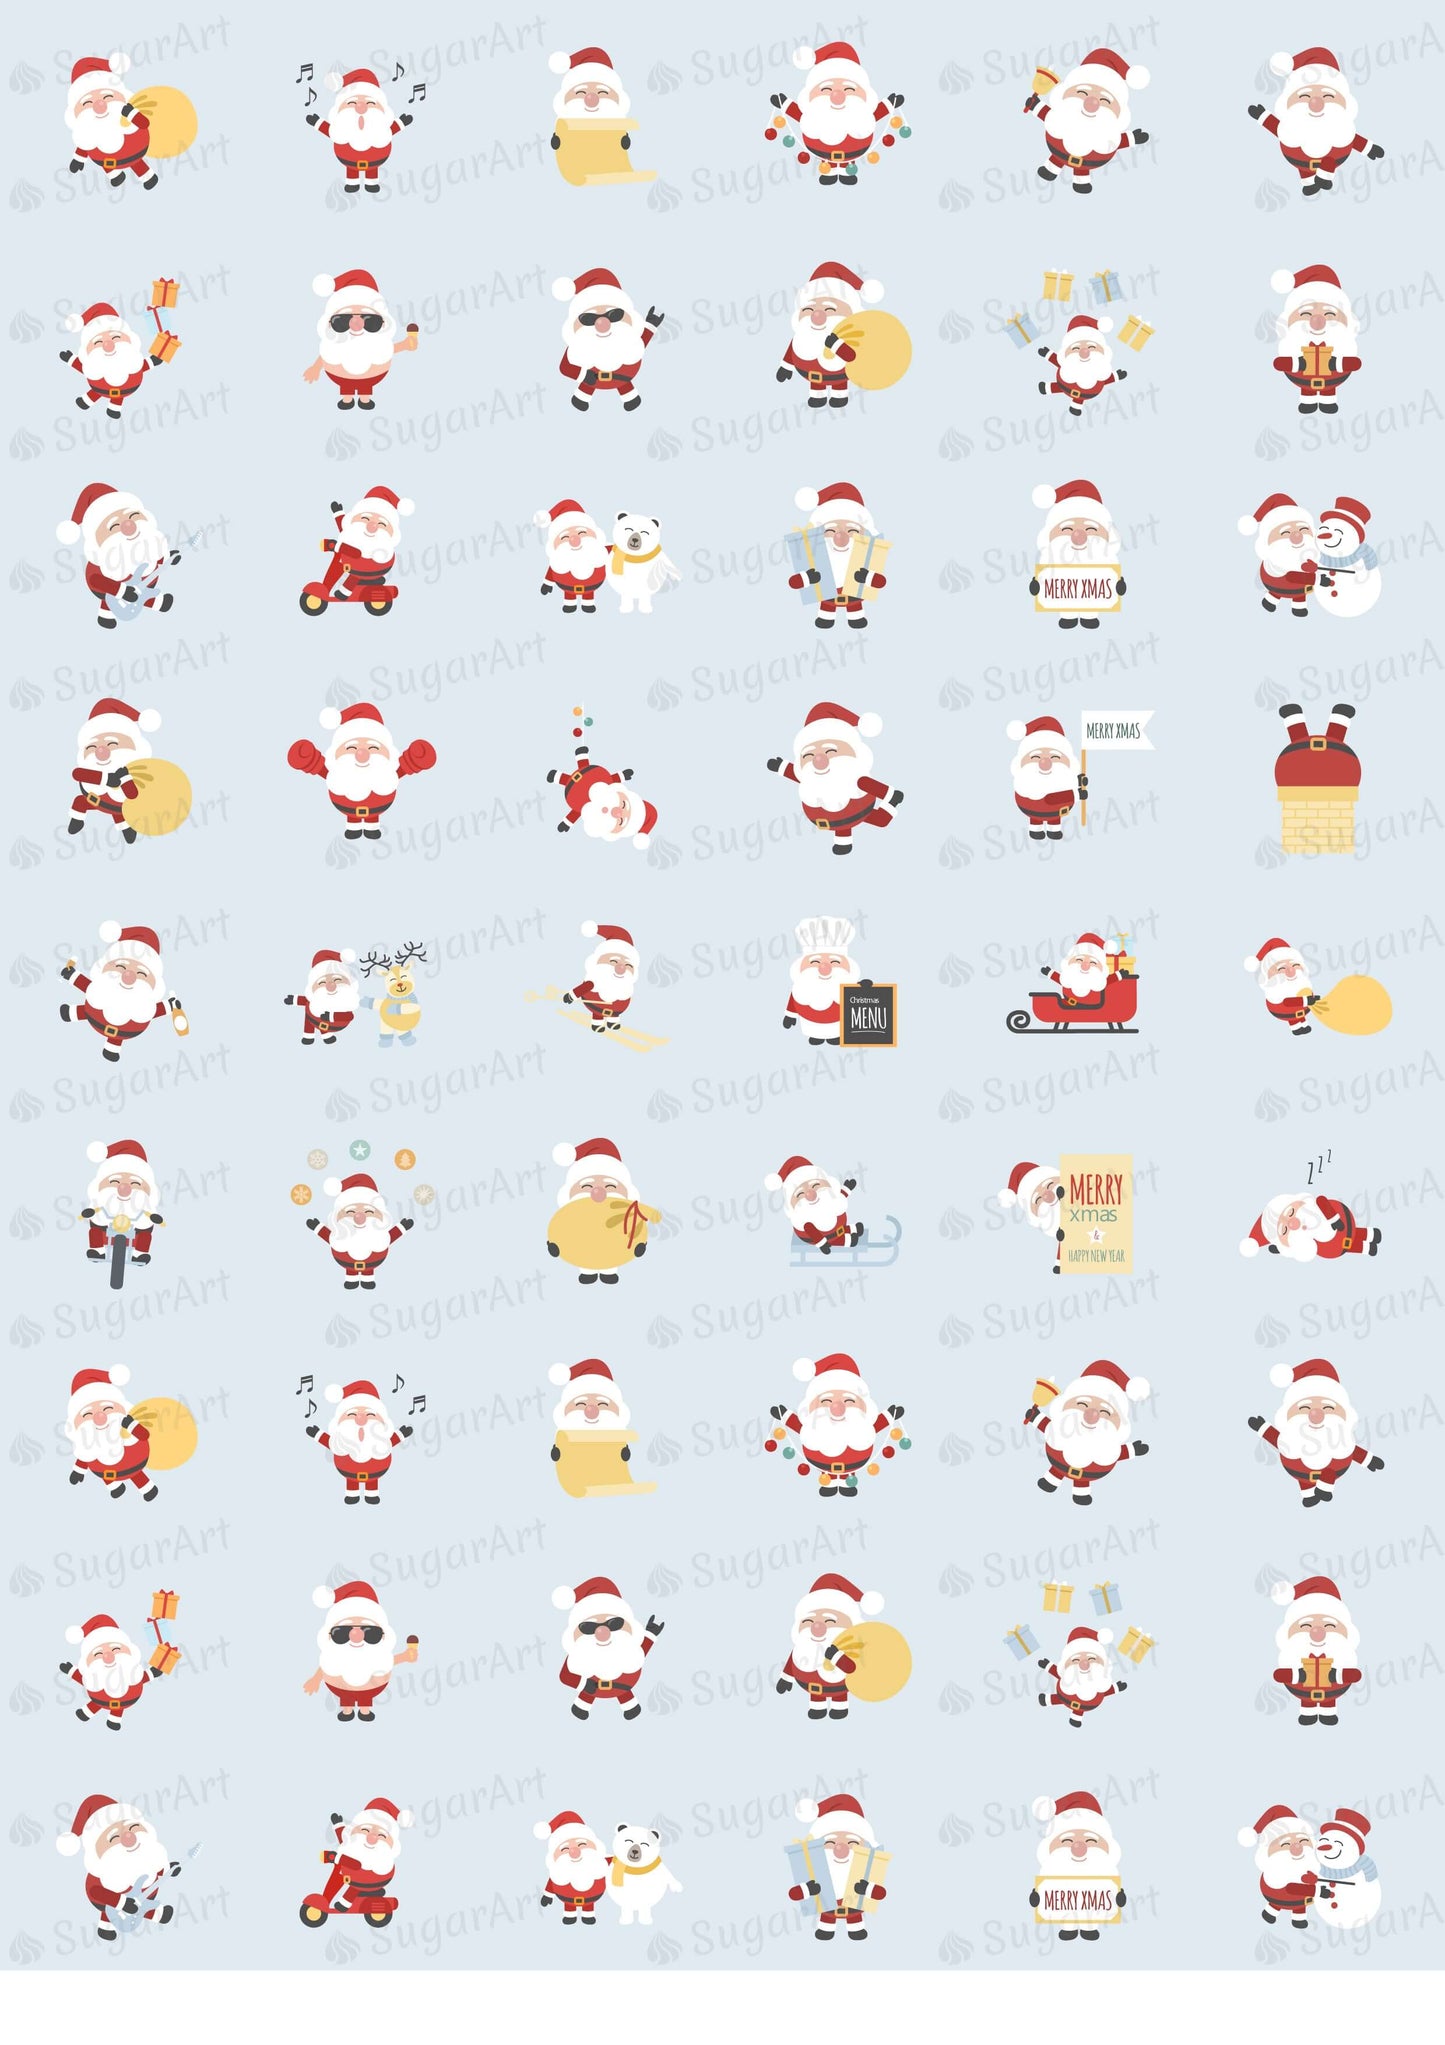 Funny Santa Claus Collection - HSA052.